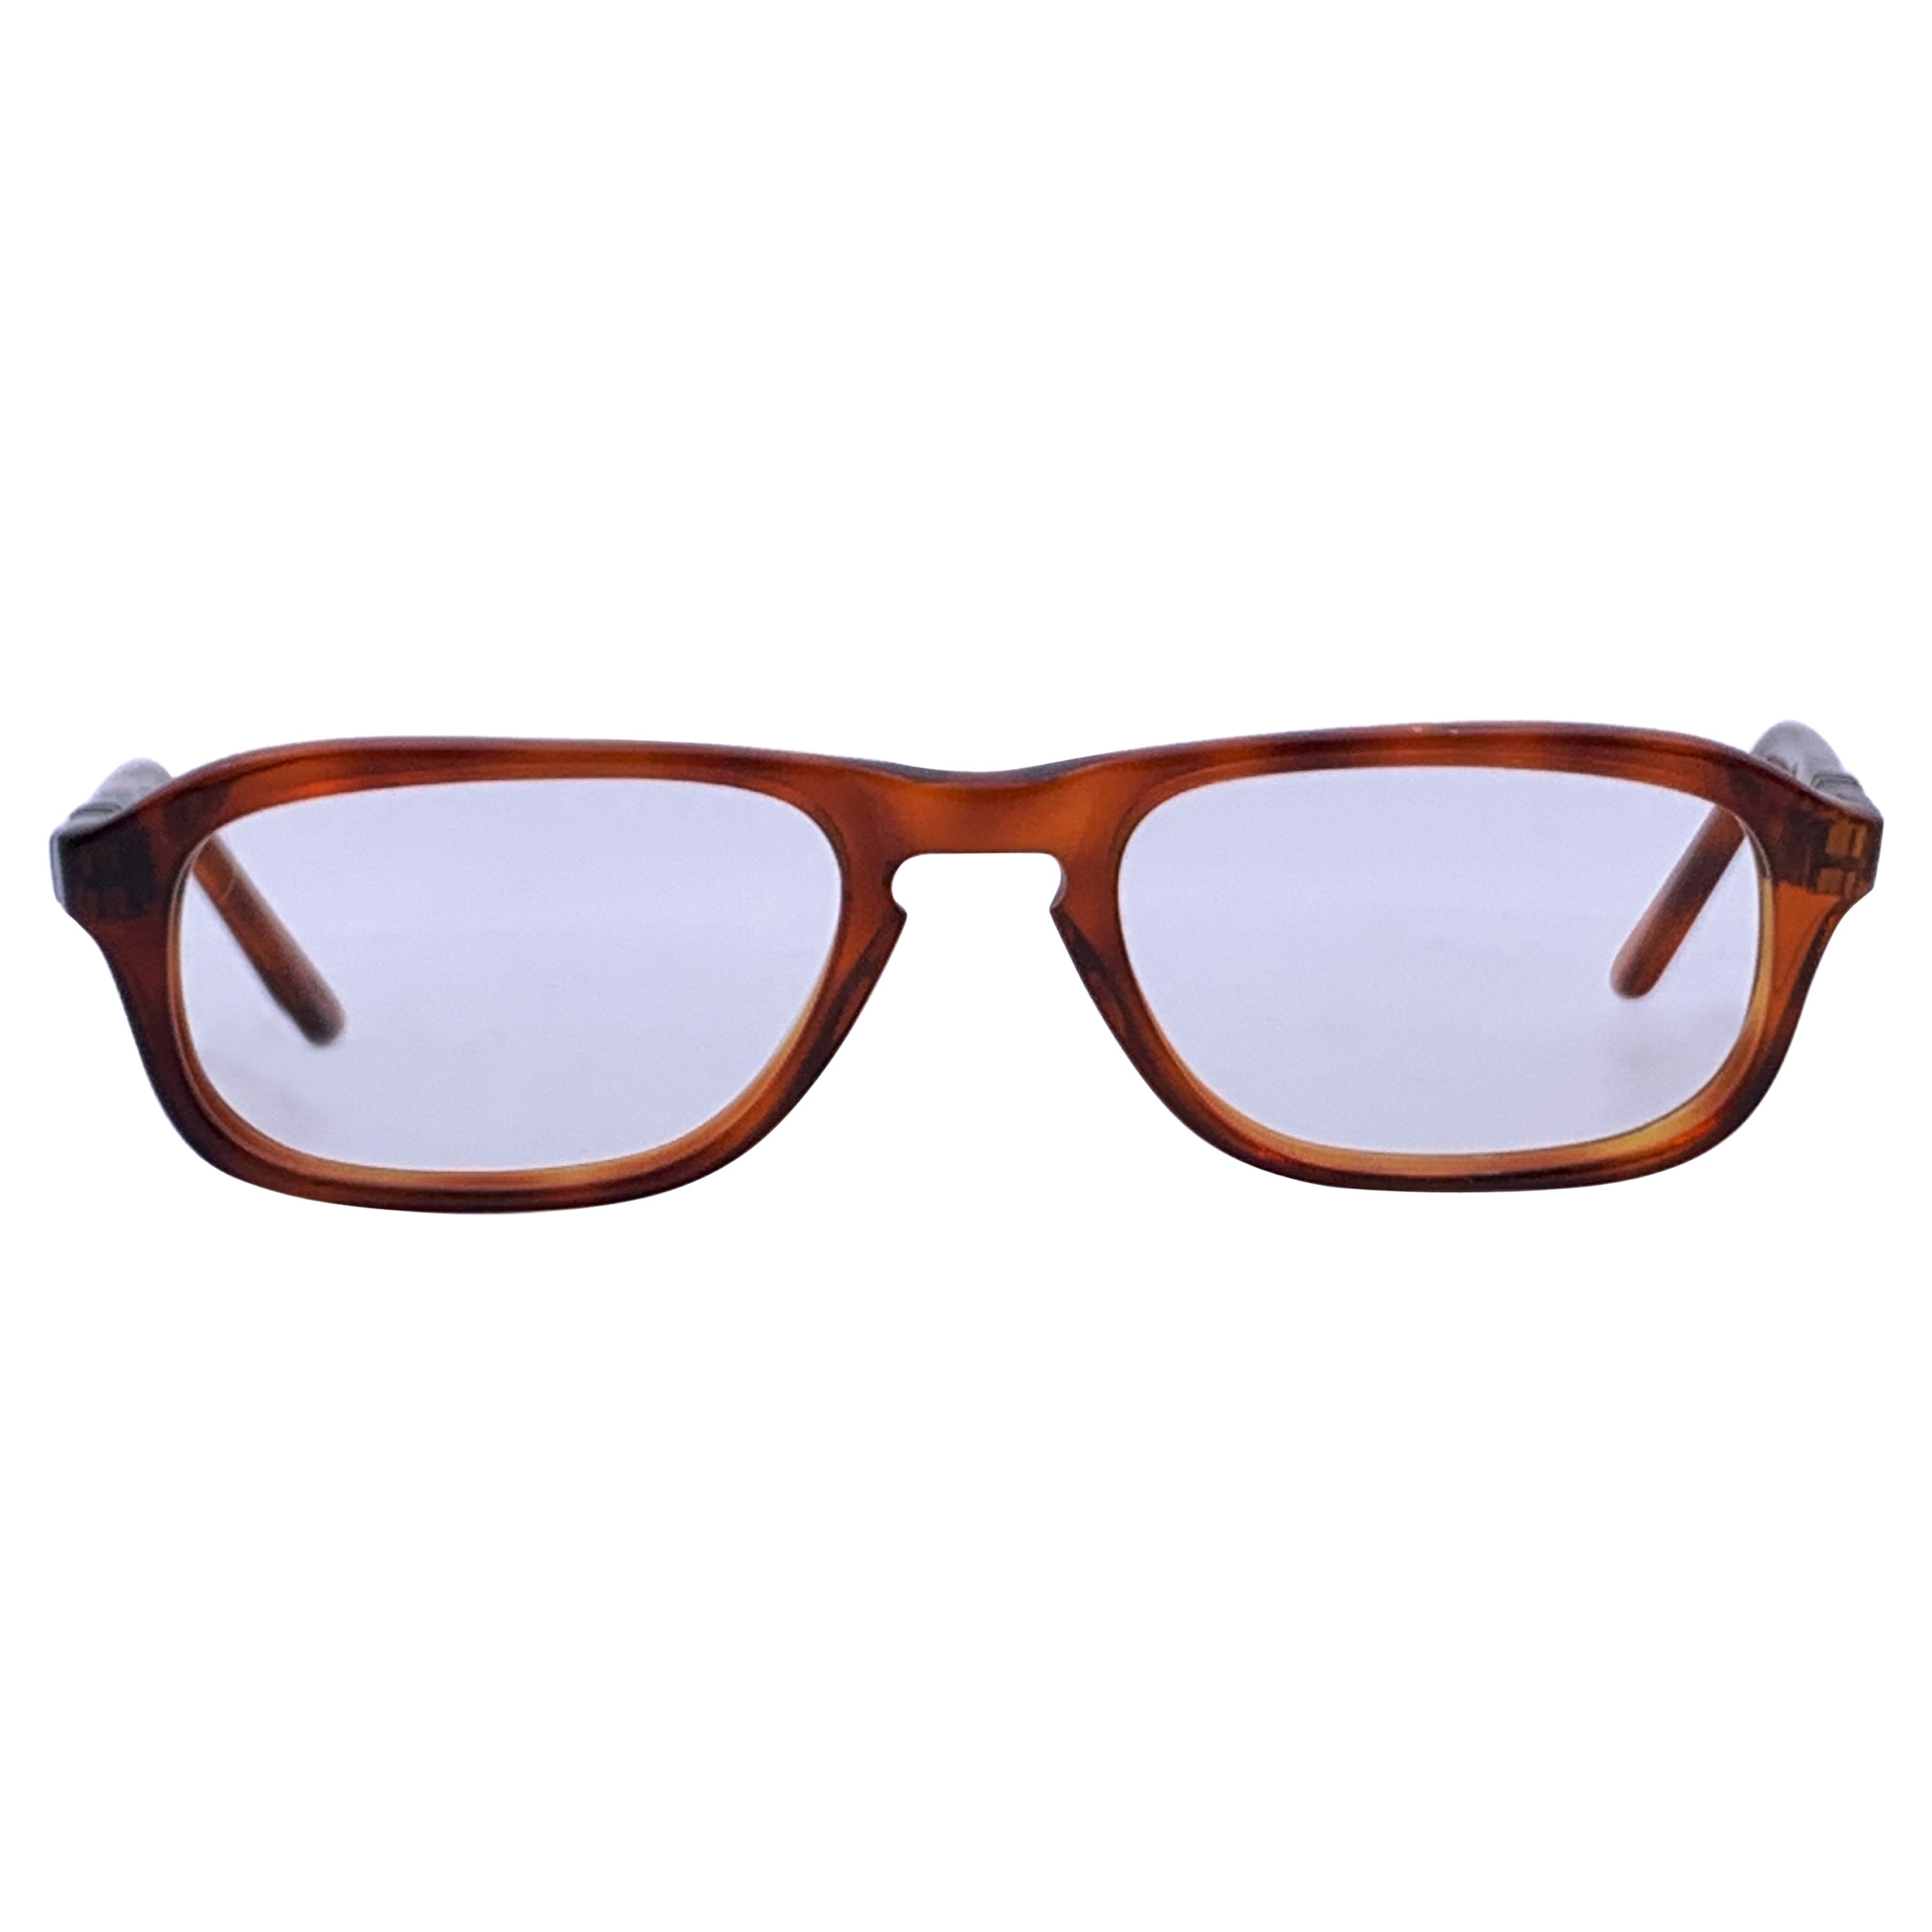 Persol Meflecto Ratti Vintage Brown Jolly 1 Eyeglasses 48-68 130 mm